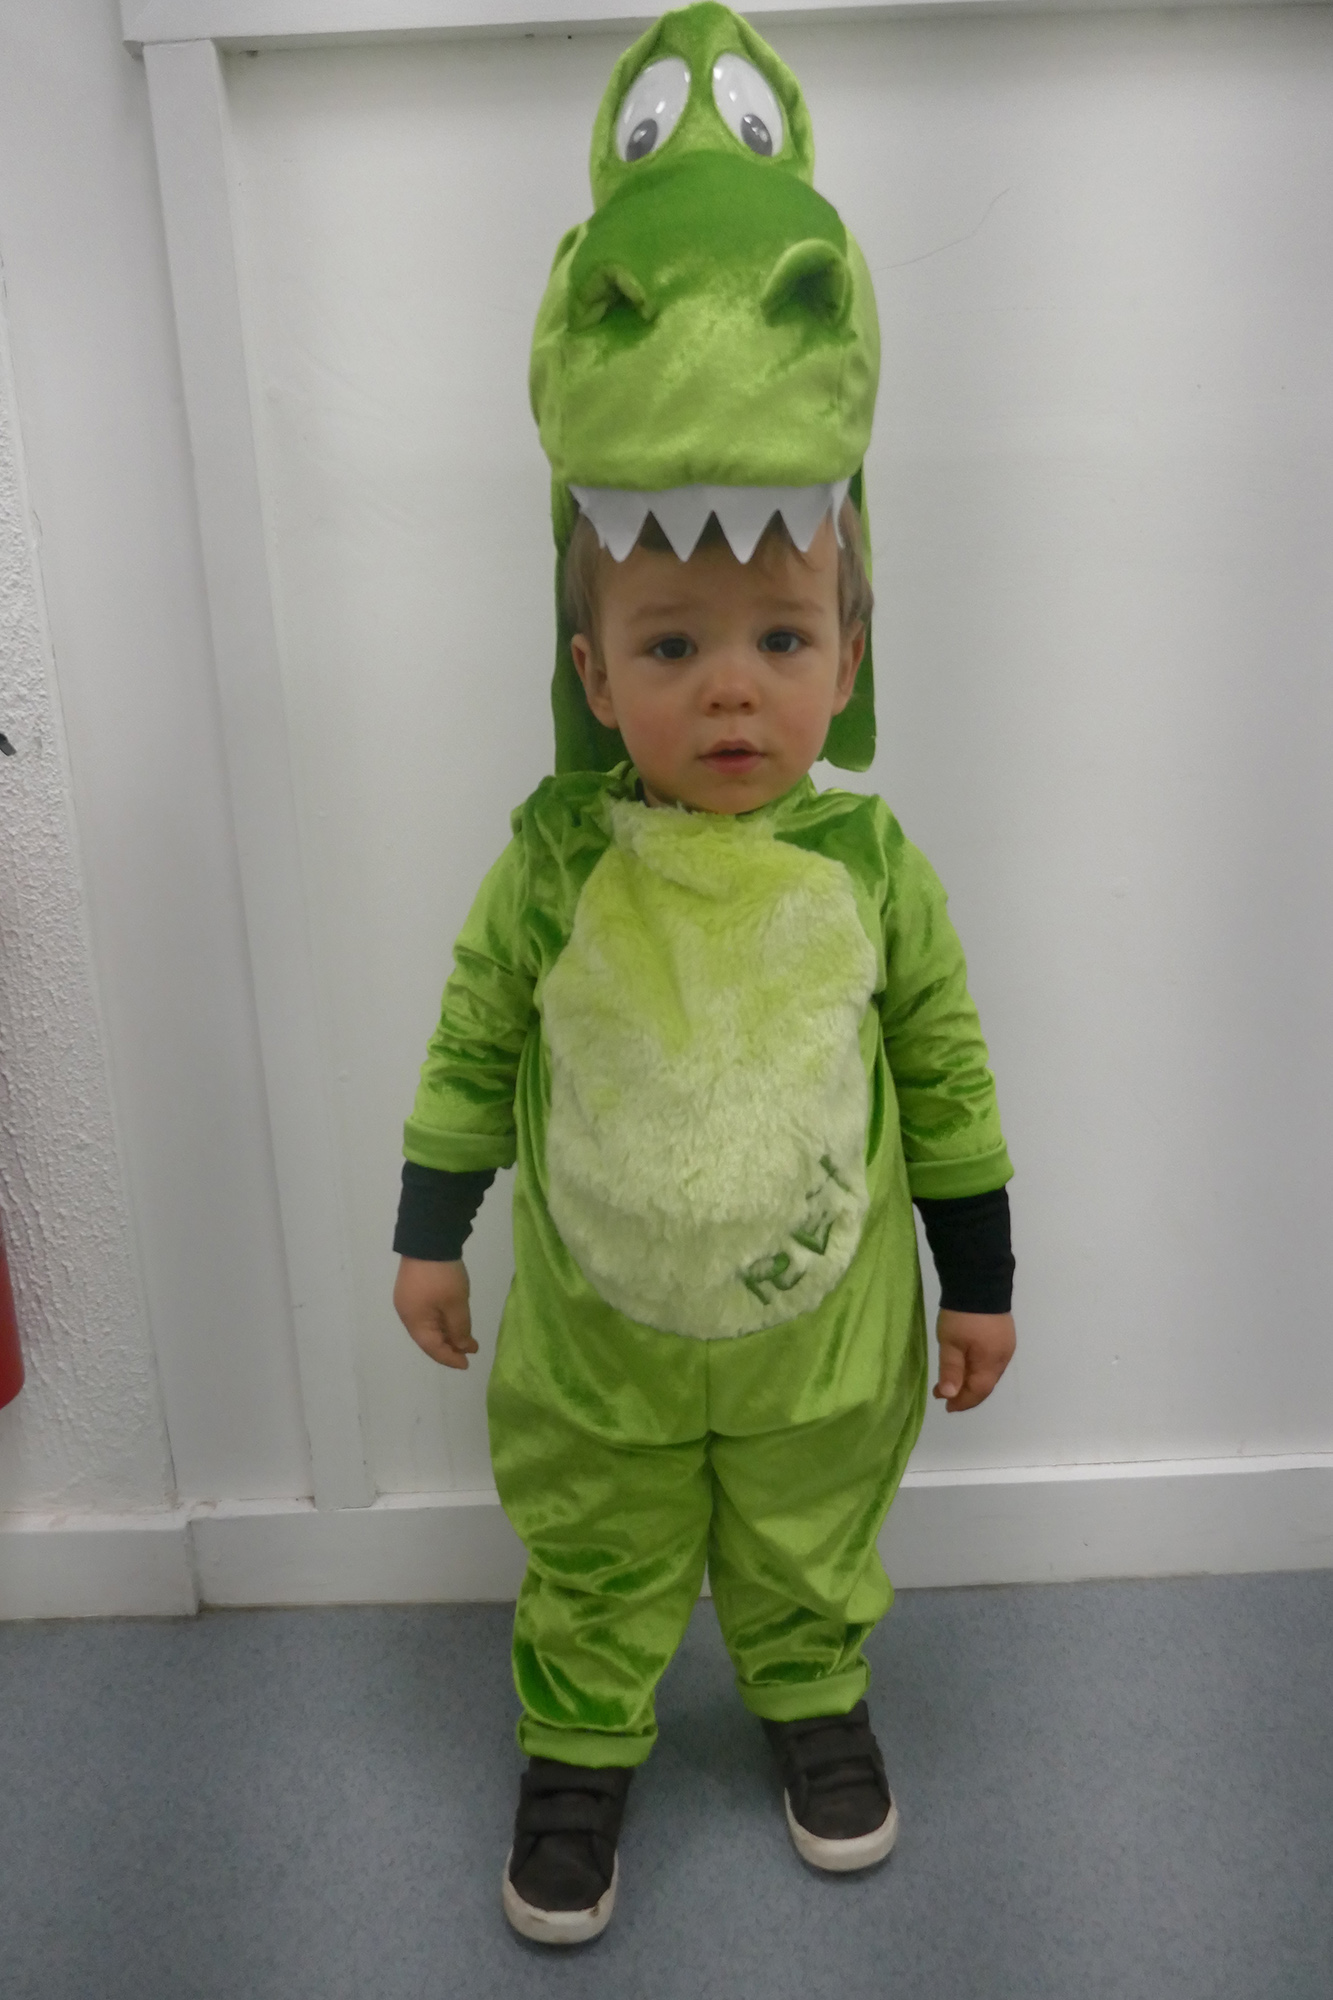 Child dressed as a Dinosaur